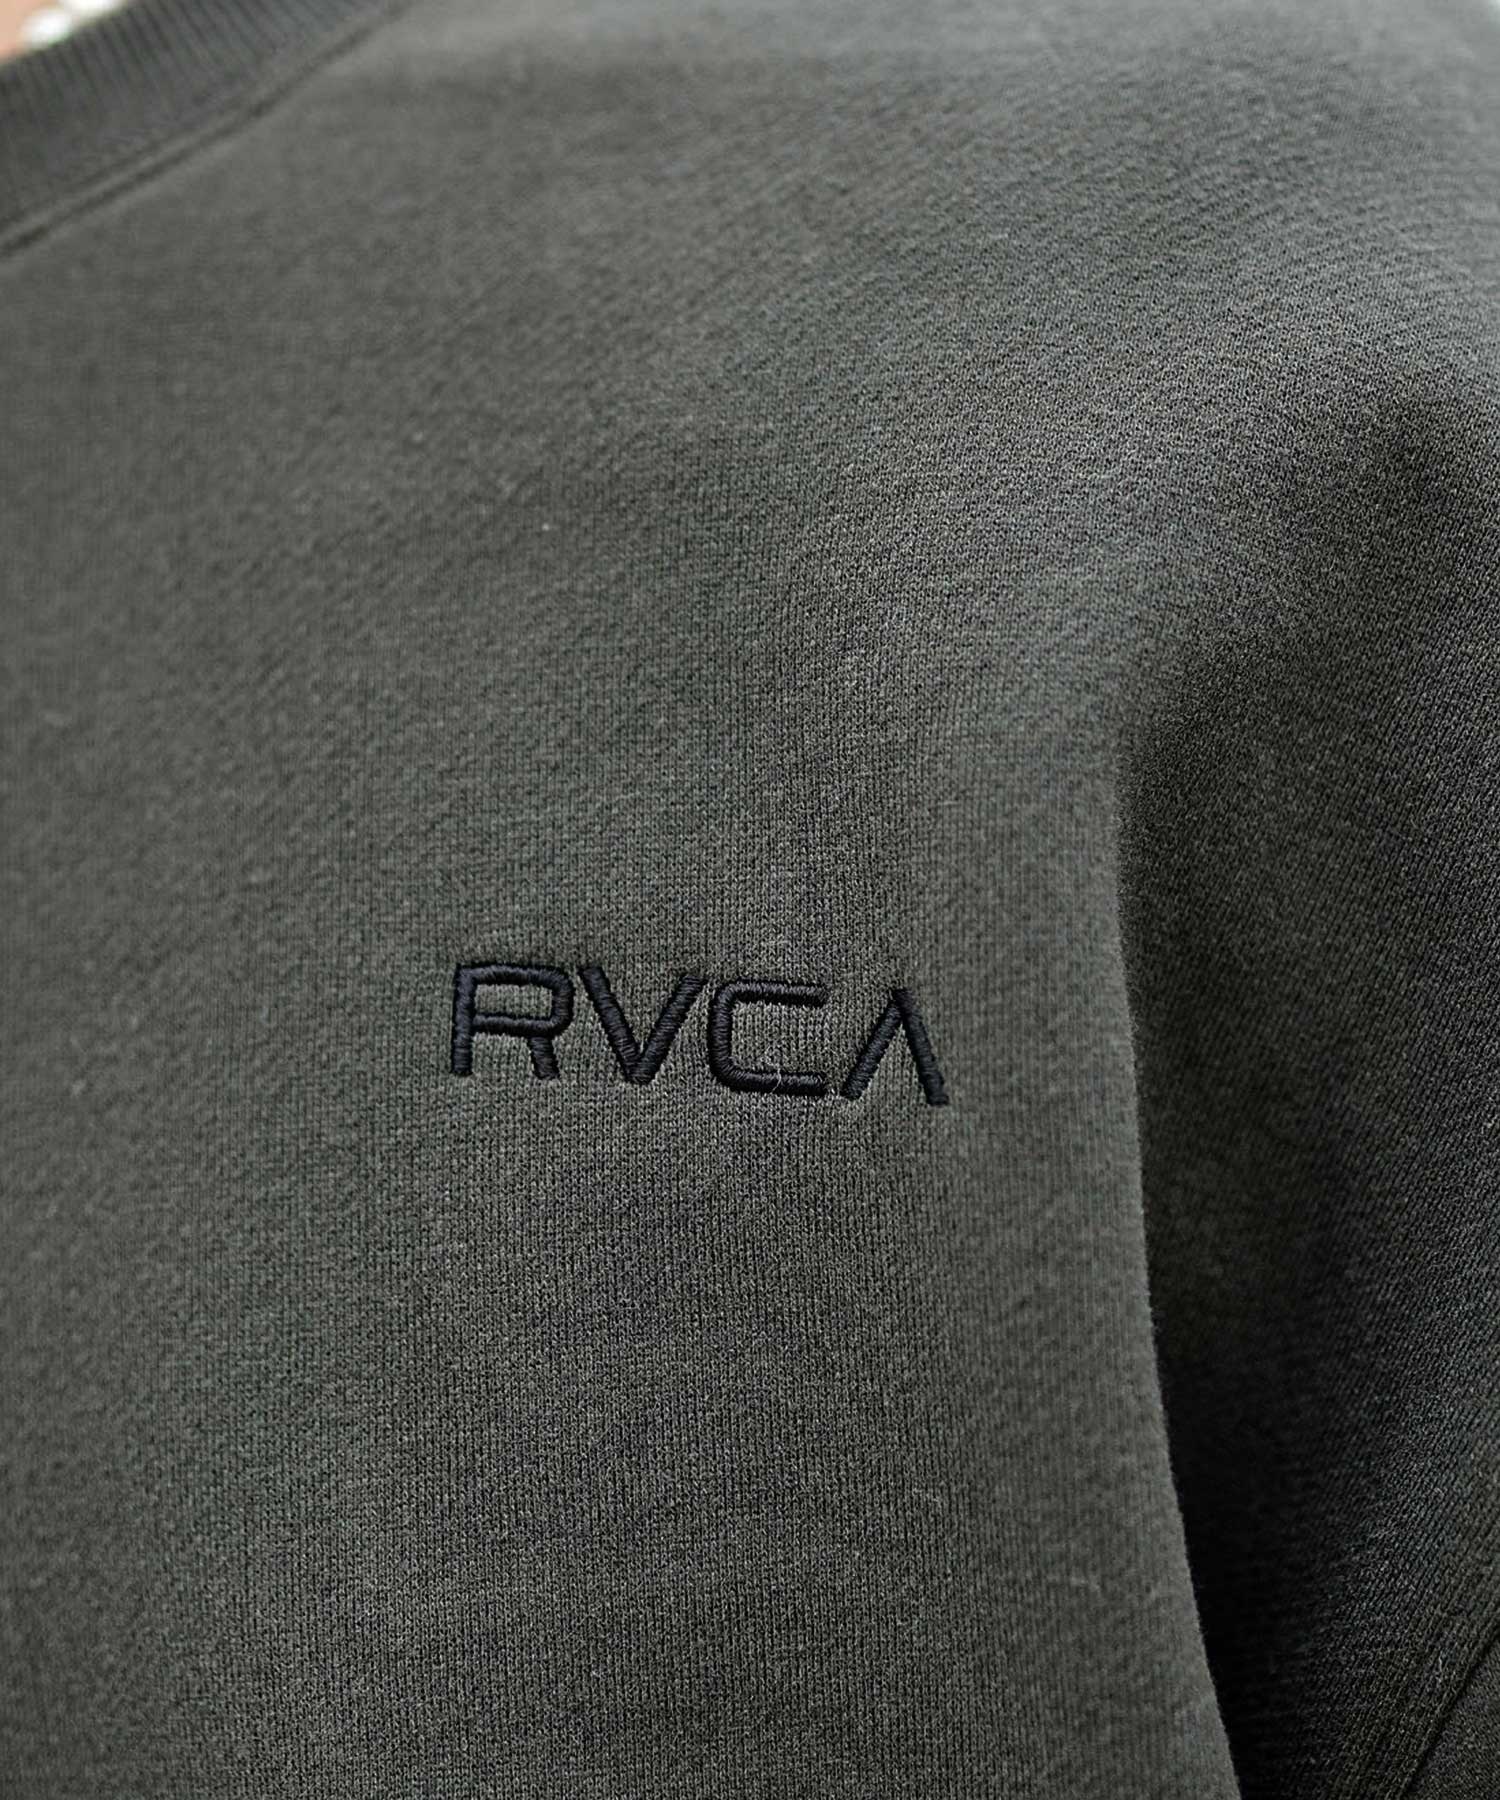 RVCA/ルーカ FAKE RVCA CR メンズ トレーナー クルーネック スウェット バックプリント 裏起毛 BD042-150(GSG0-S)